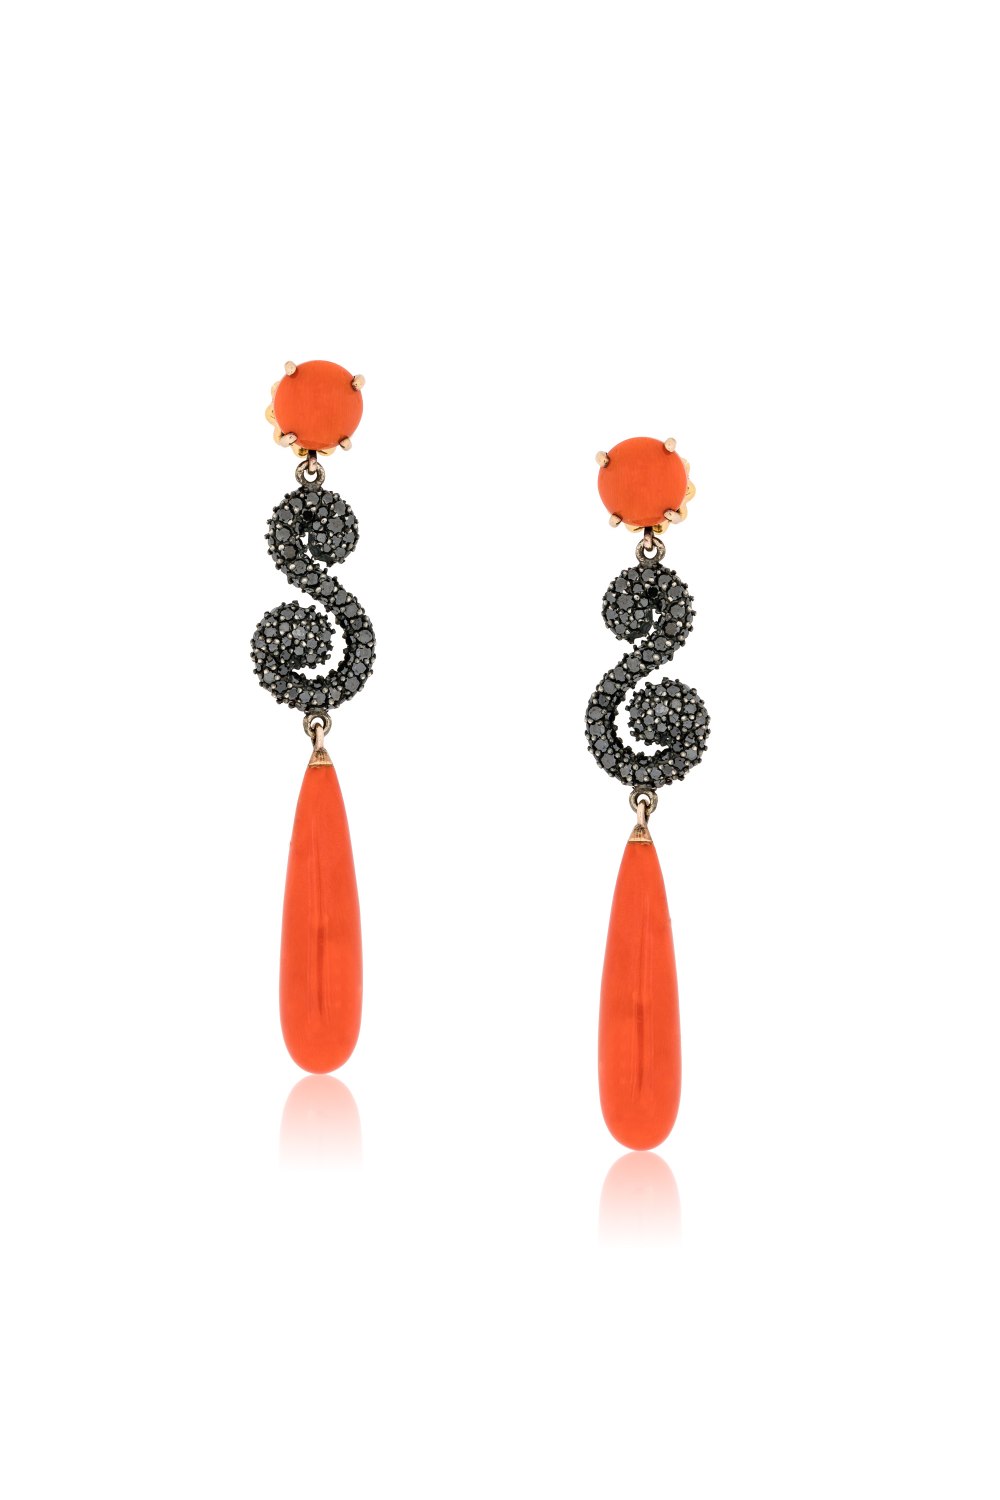 Coral & Black Diamond Dangle Earrings